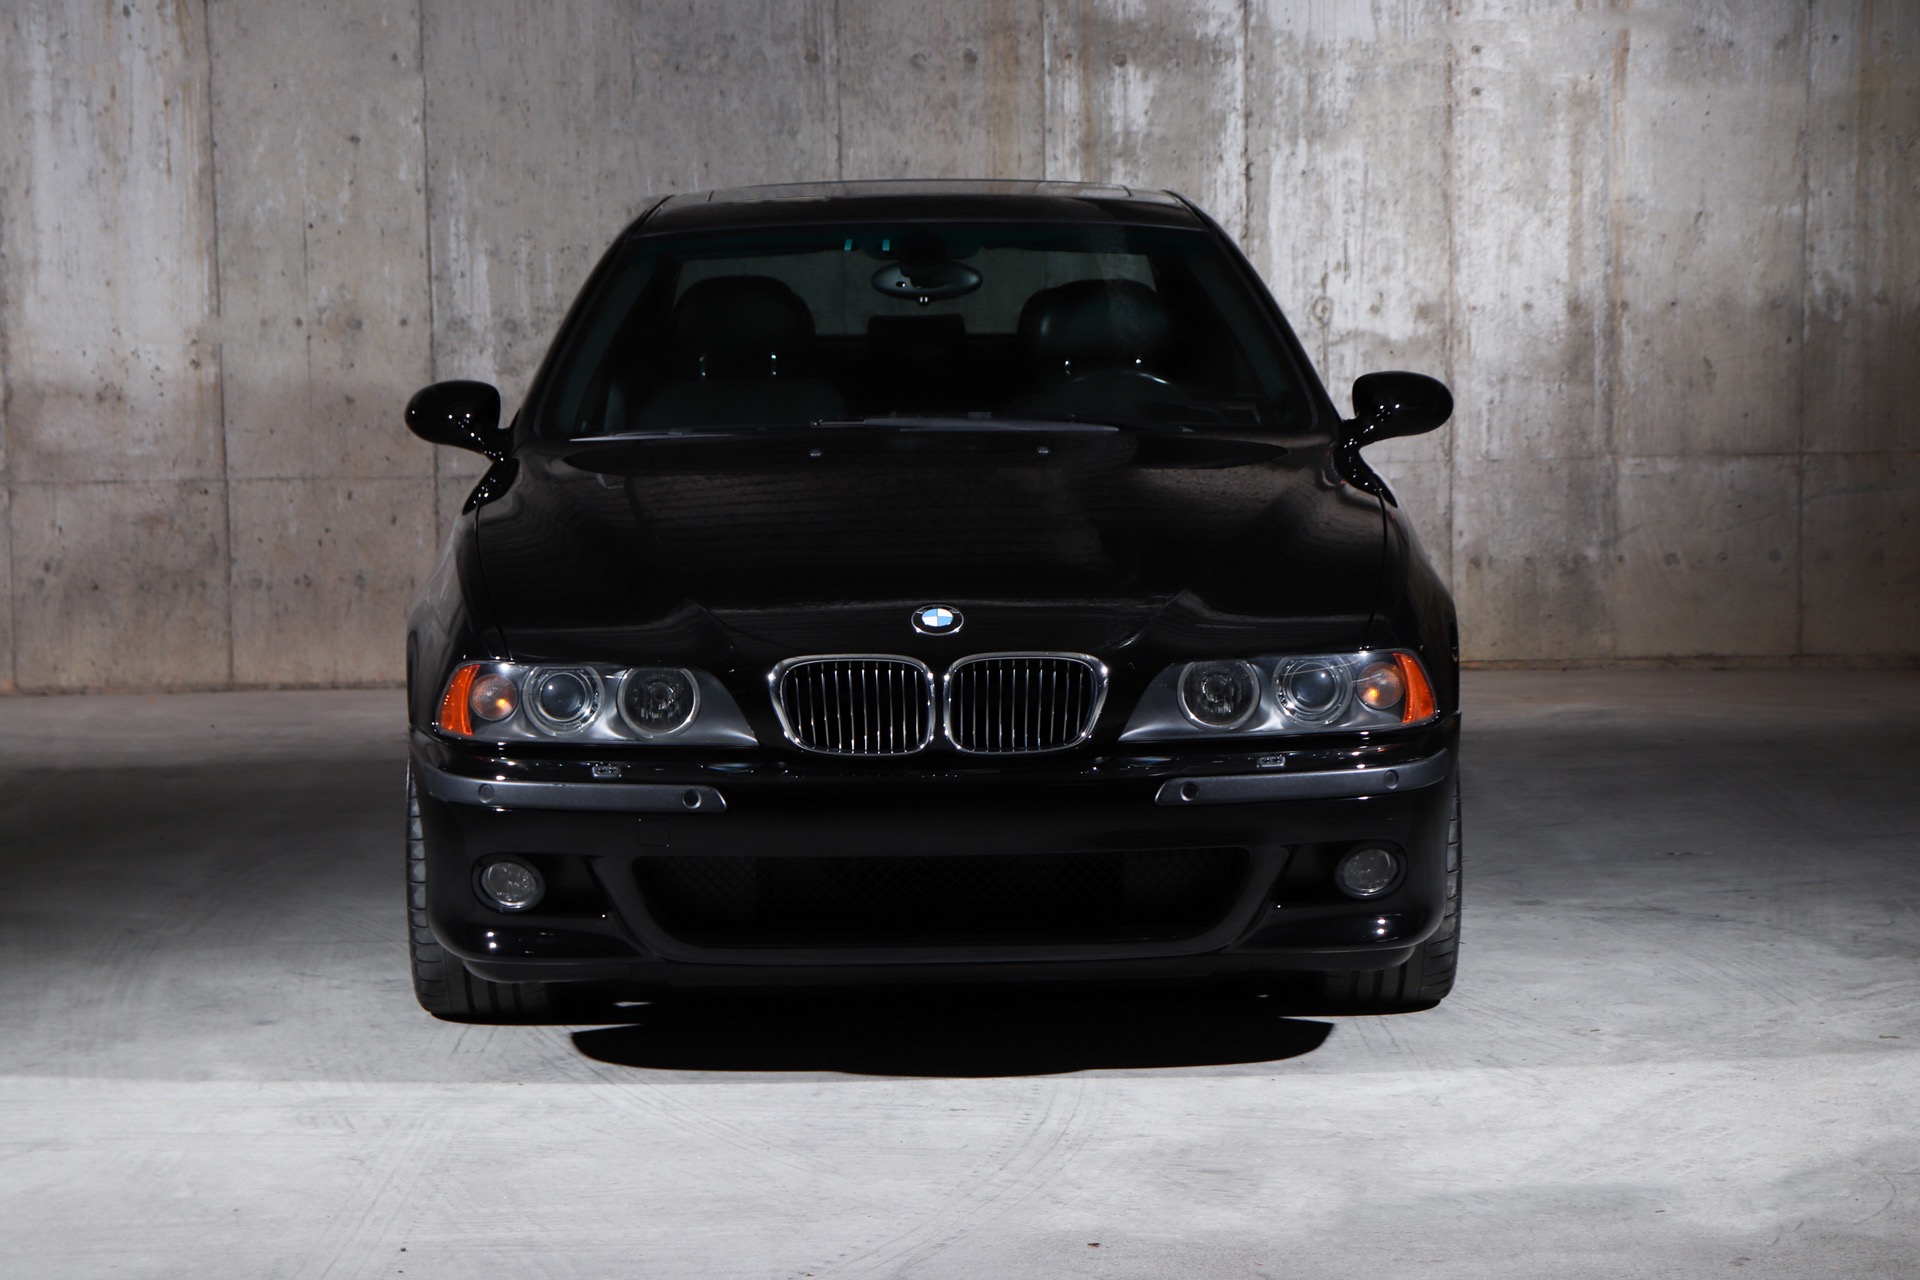 2002 BMW M5 - Carbon Black/Black - 6MT - 105k Miles - 100% Stock